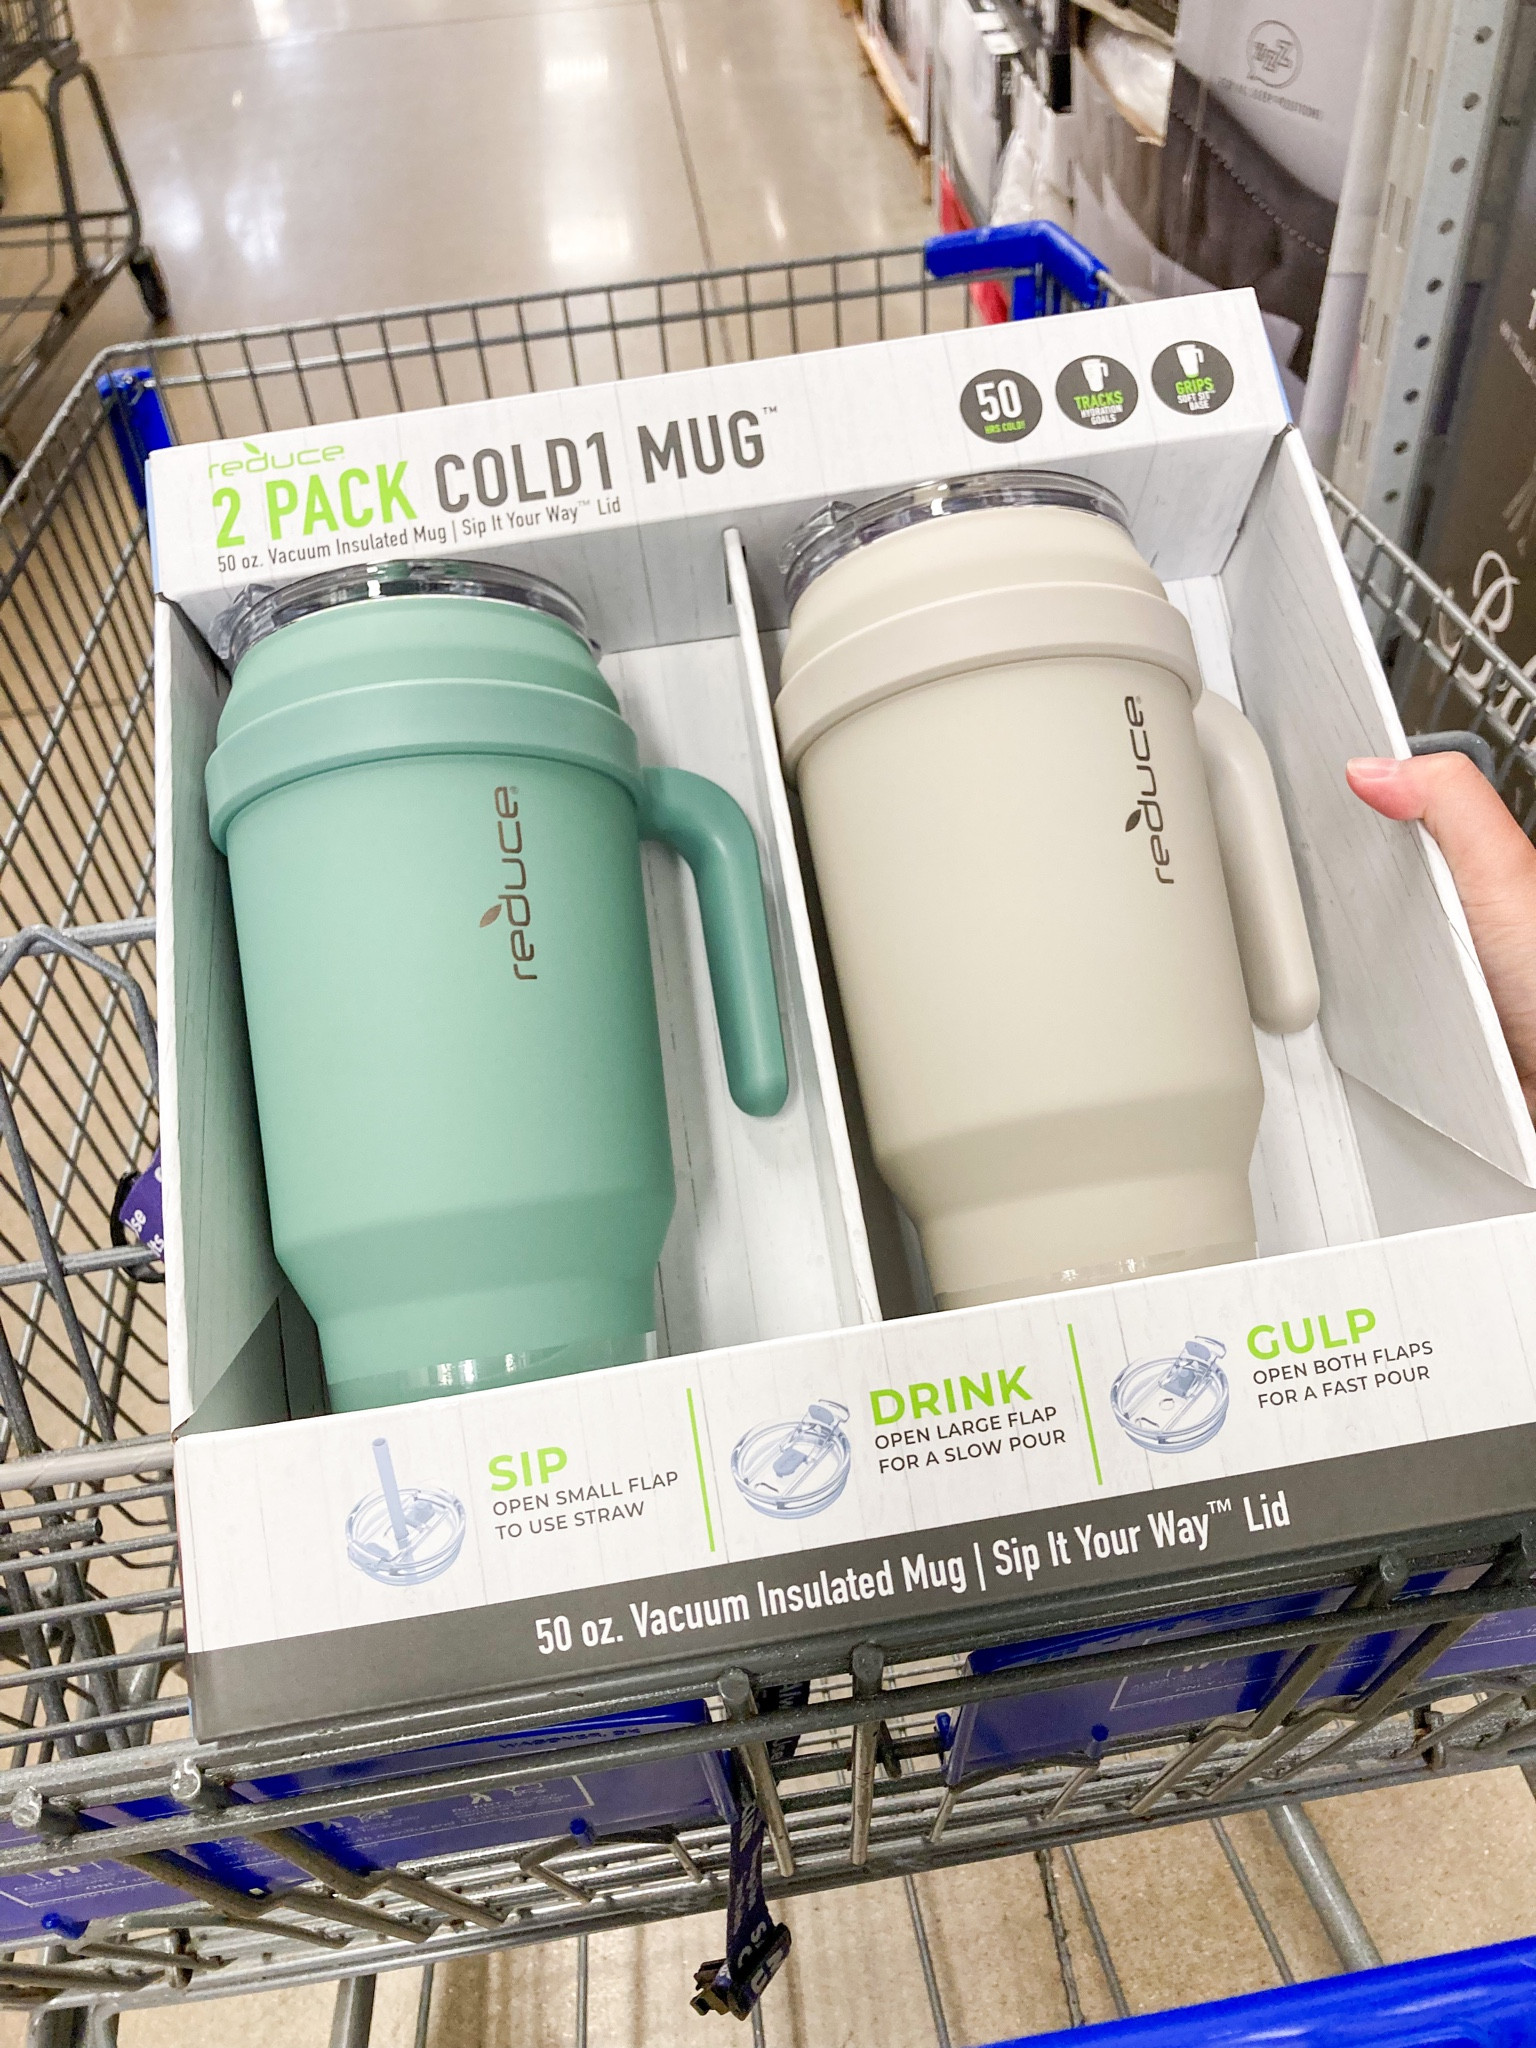 Reduce Cold1 50 oz Tumbler Mug - Shop Now in 2023